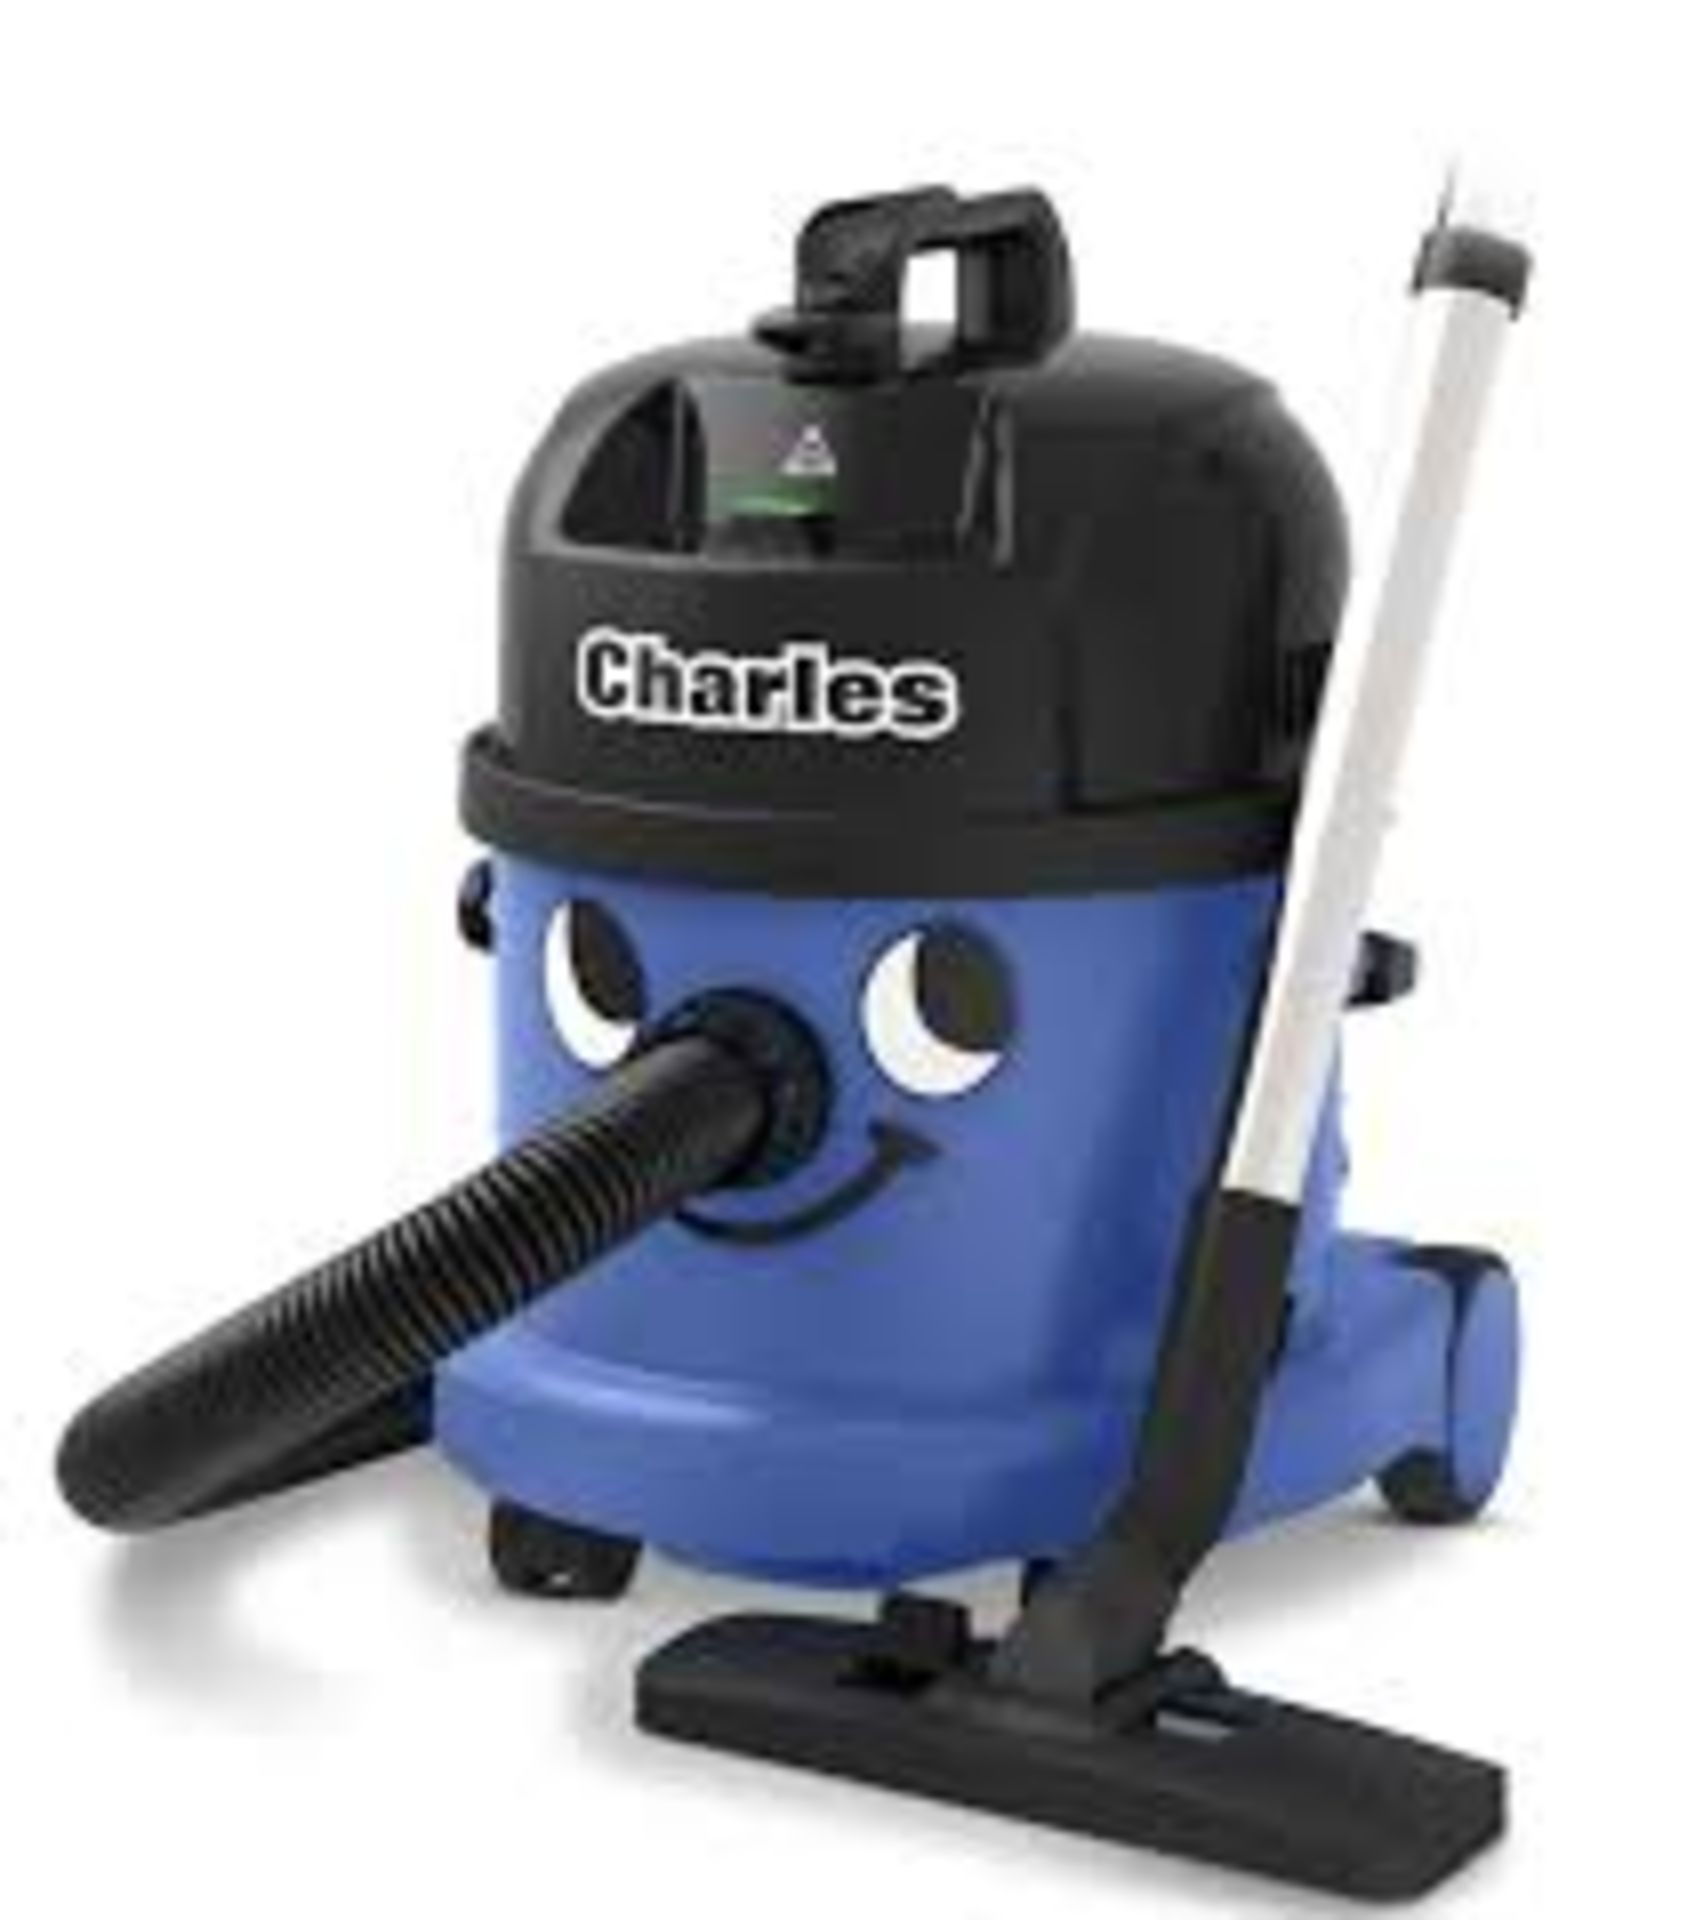 Numatic Charles CVC370-2 Corded Wet & dry vacuum, 15.00L. - S2.1. Big mess? No problem! Cleaning